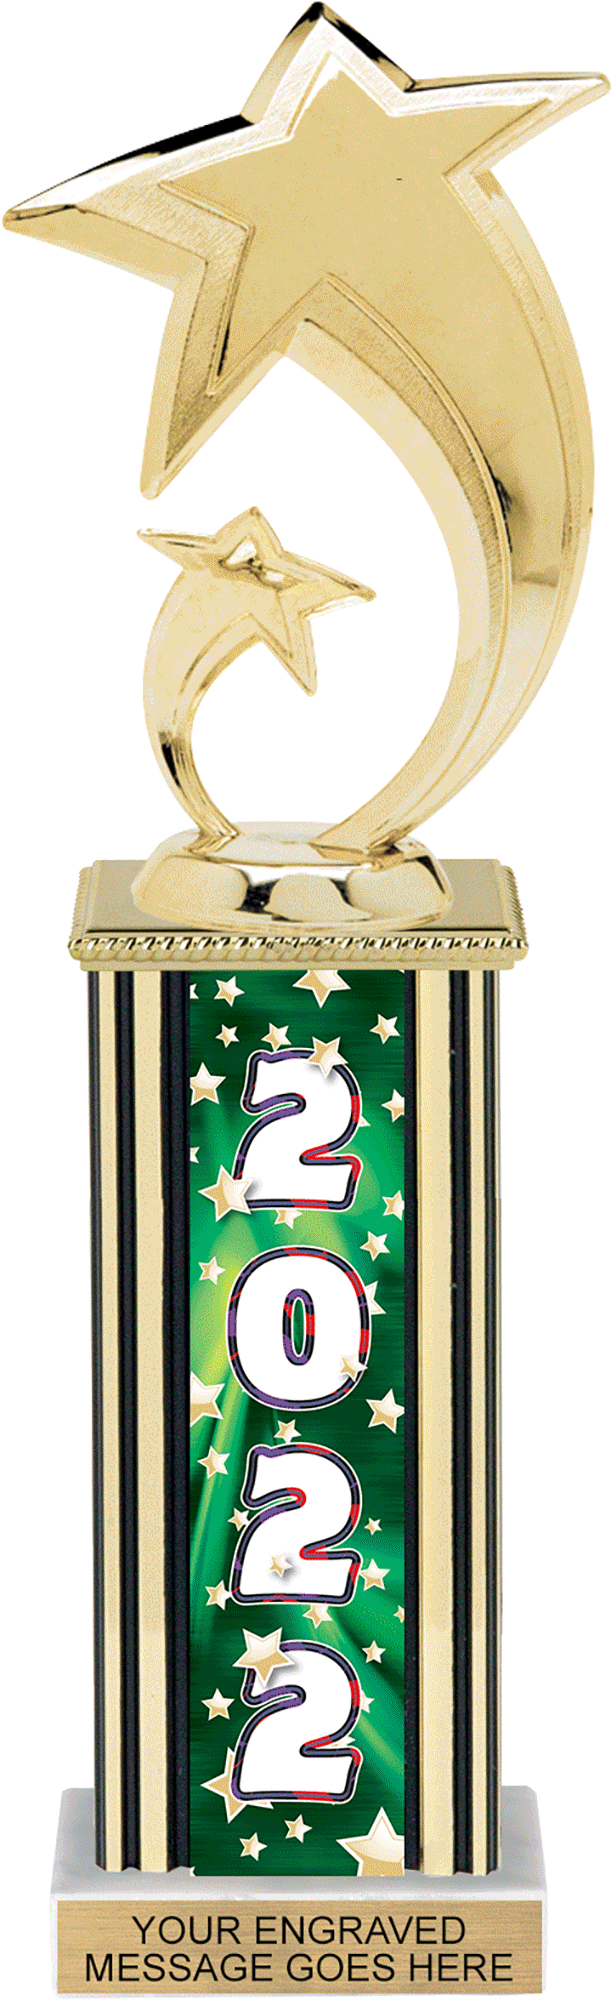 Year Glowing Stars Rectangle Column Trophy - Green 12 inch